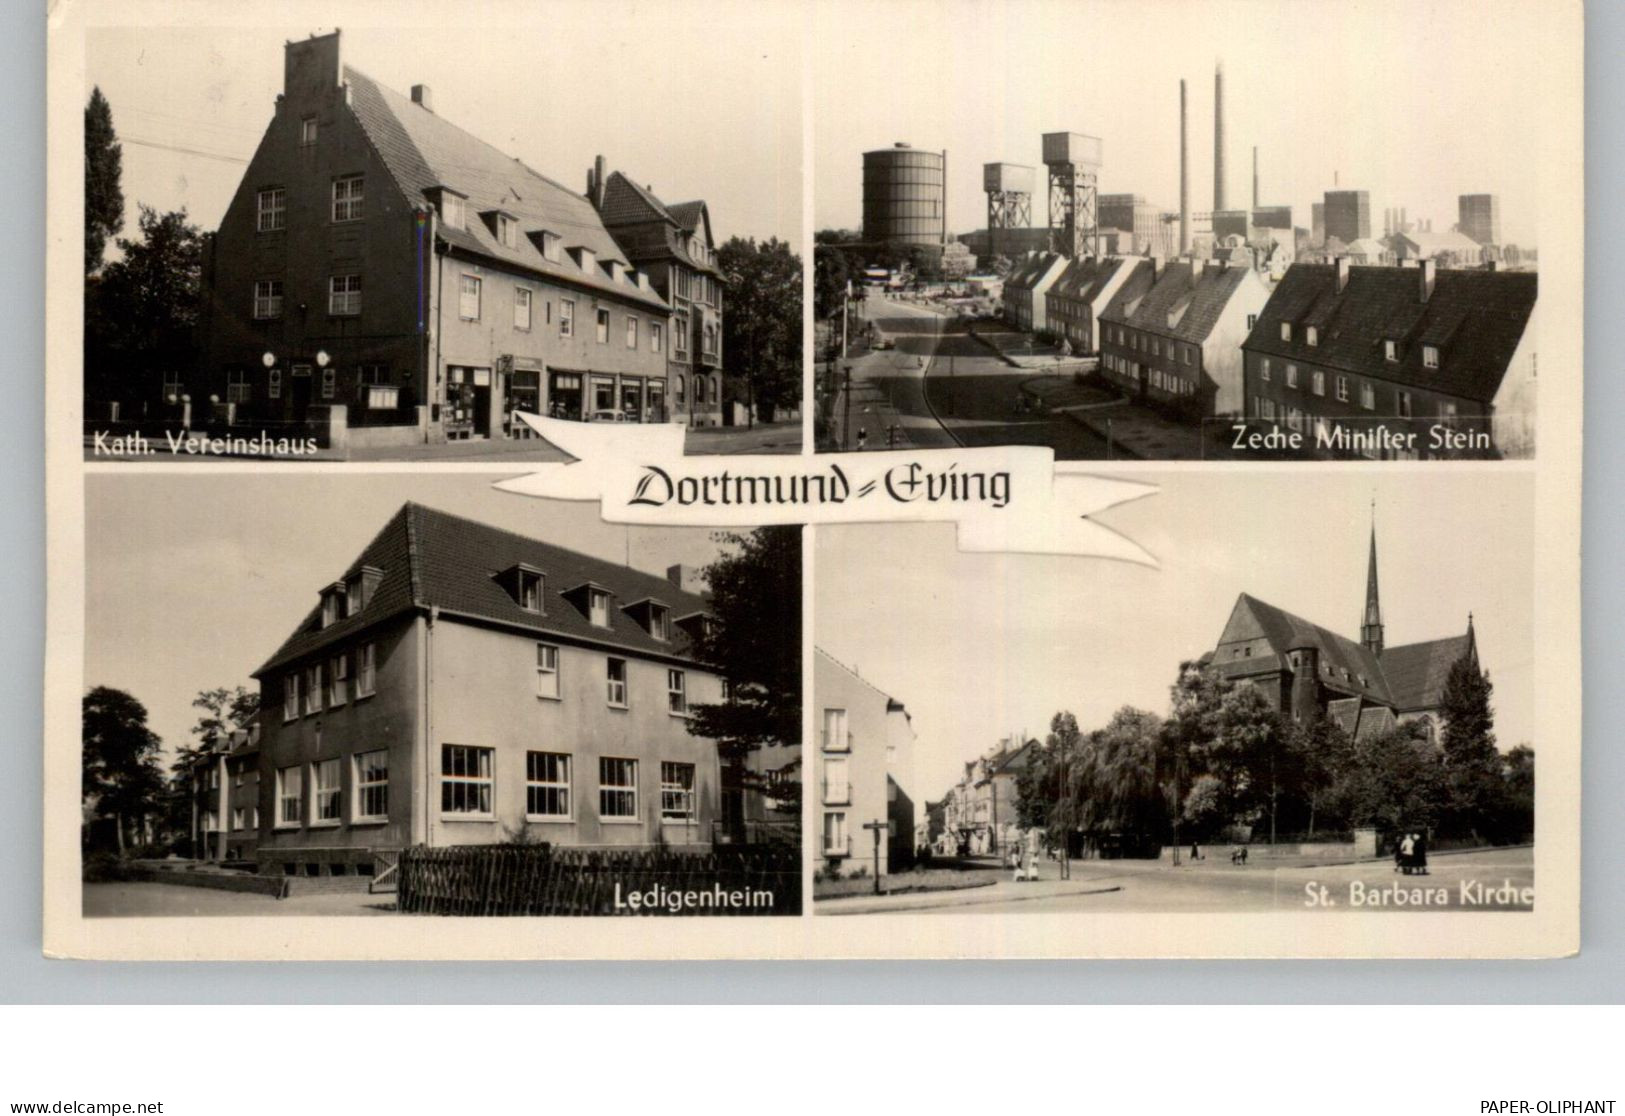 4600 DORTMUND - EVING, Zeche Minister Stein, Kath. Vereinshaus, Ledigenheim, St. Barbara Kirche, 195 - Dortmund